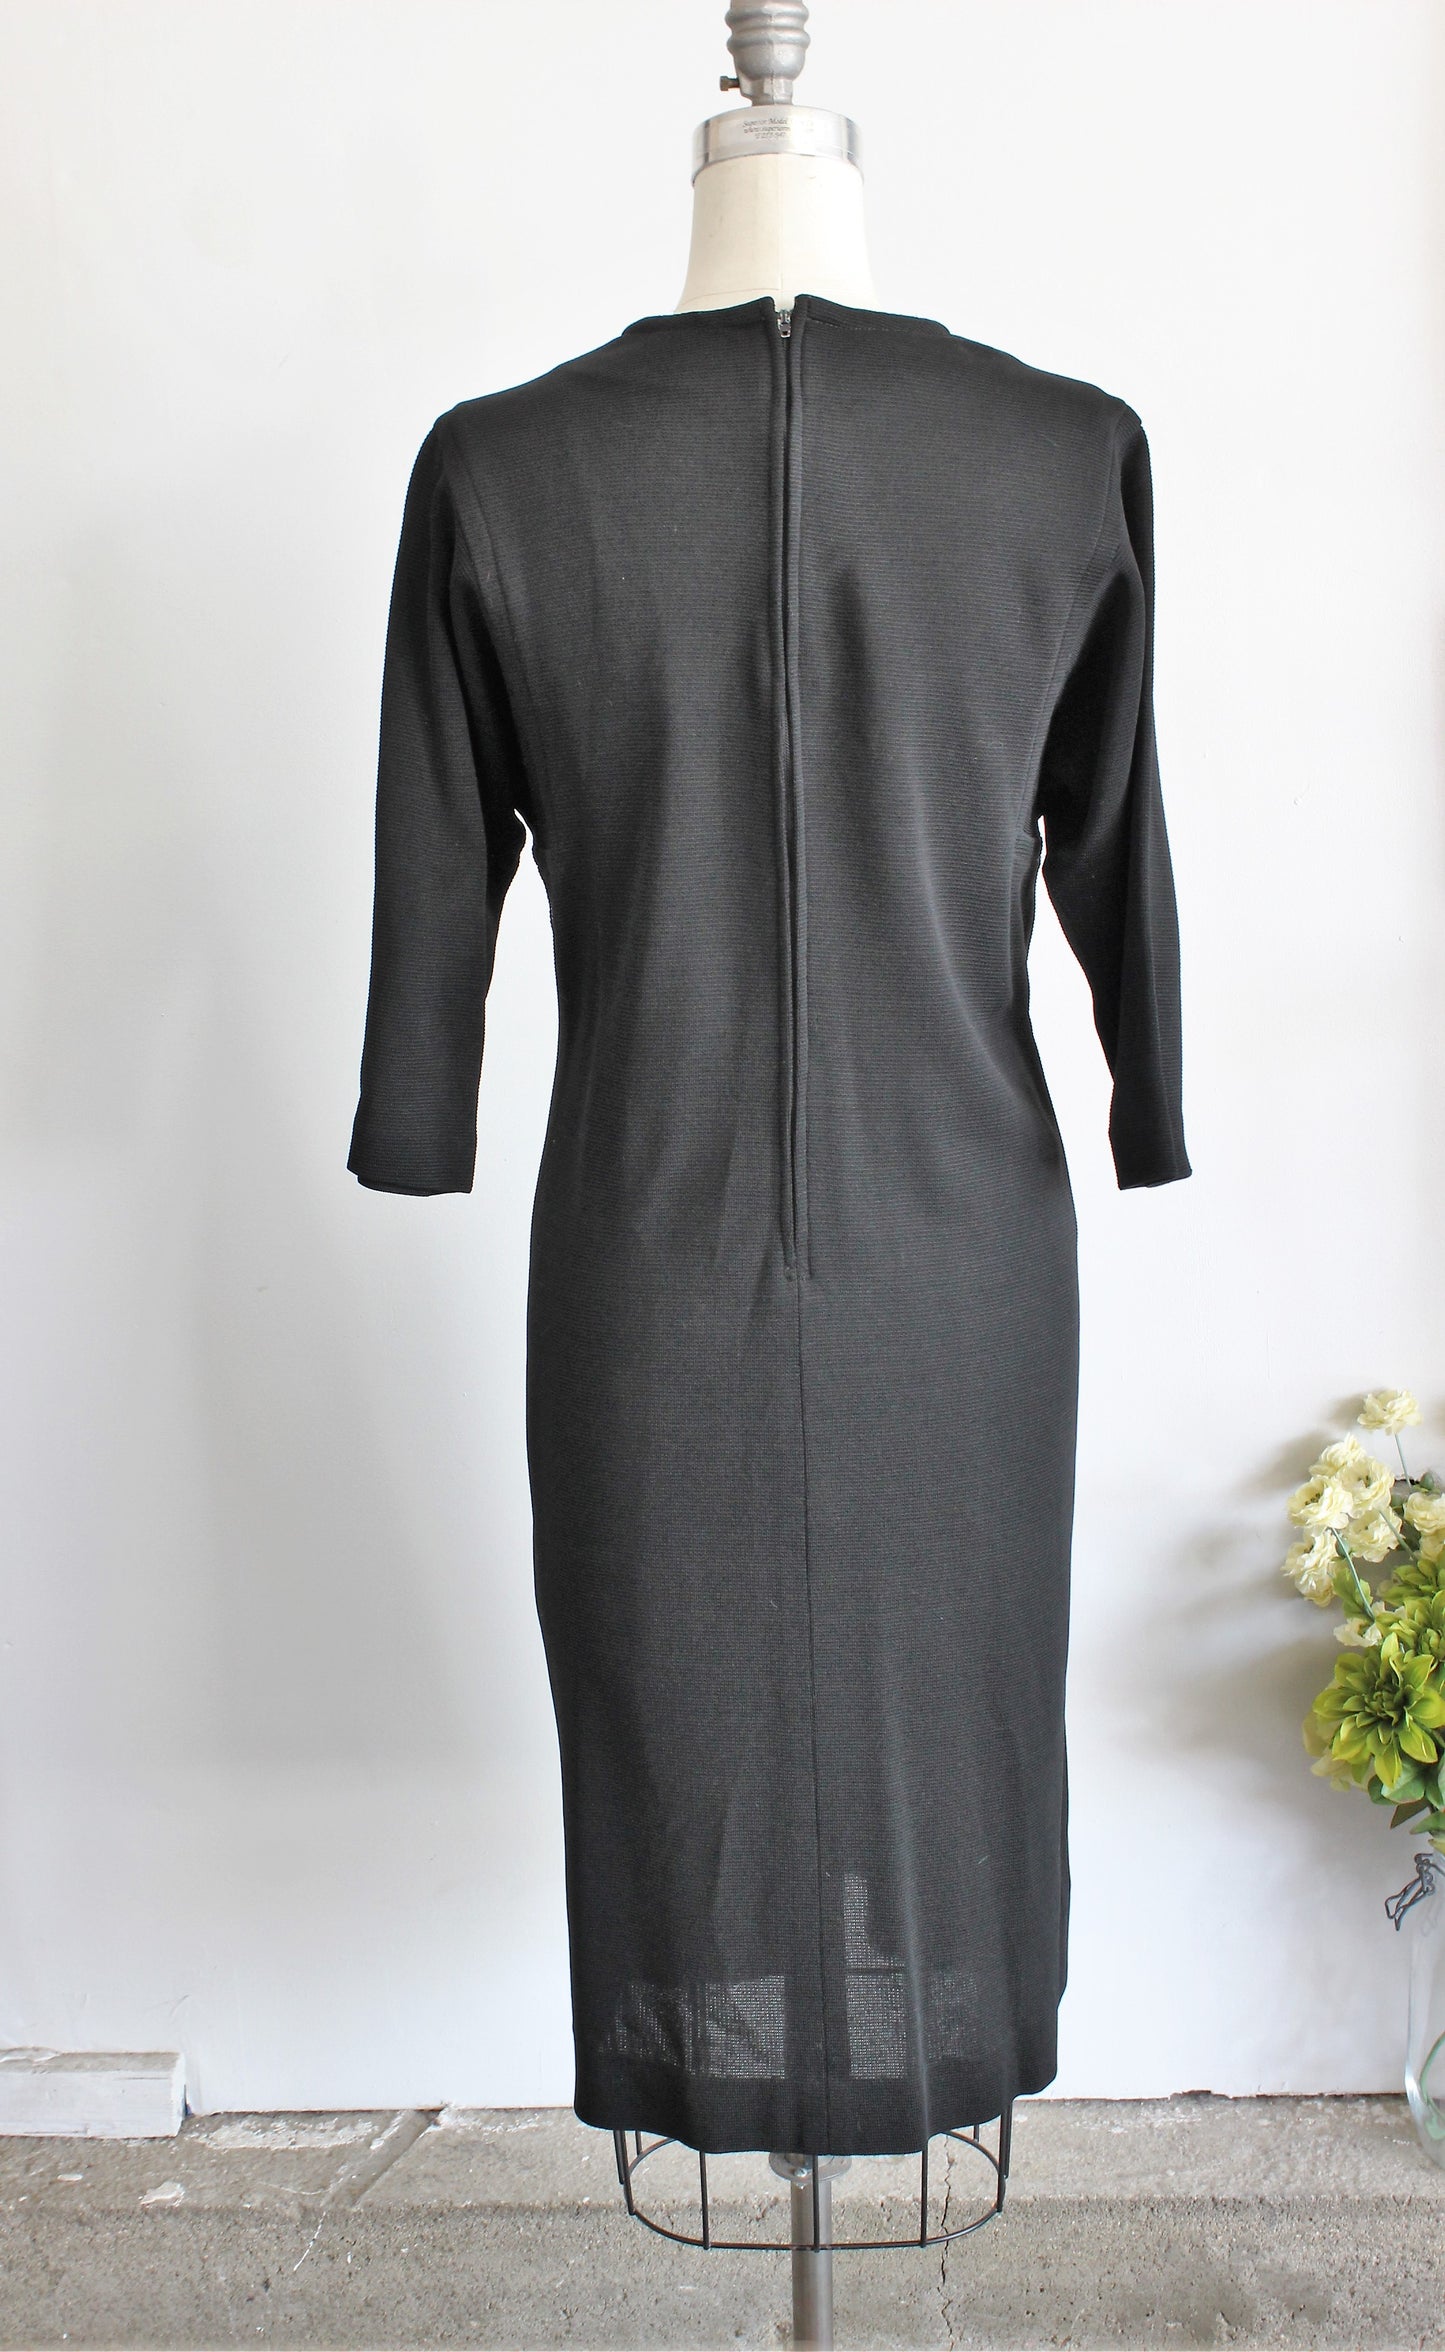 Vintage 1960s Black Sheath Dress by Rondo Fashion Knits